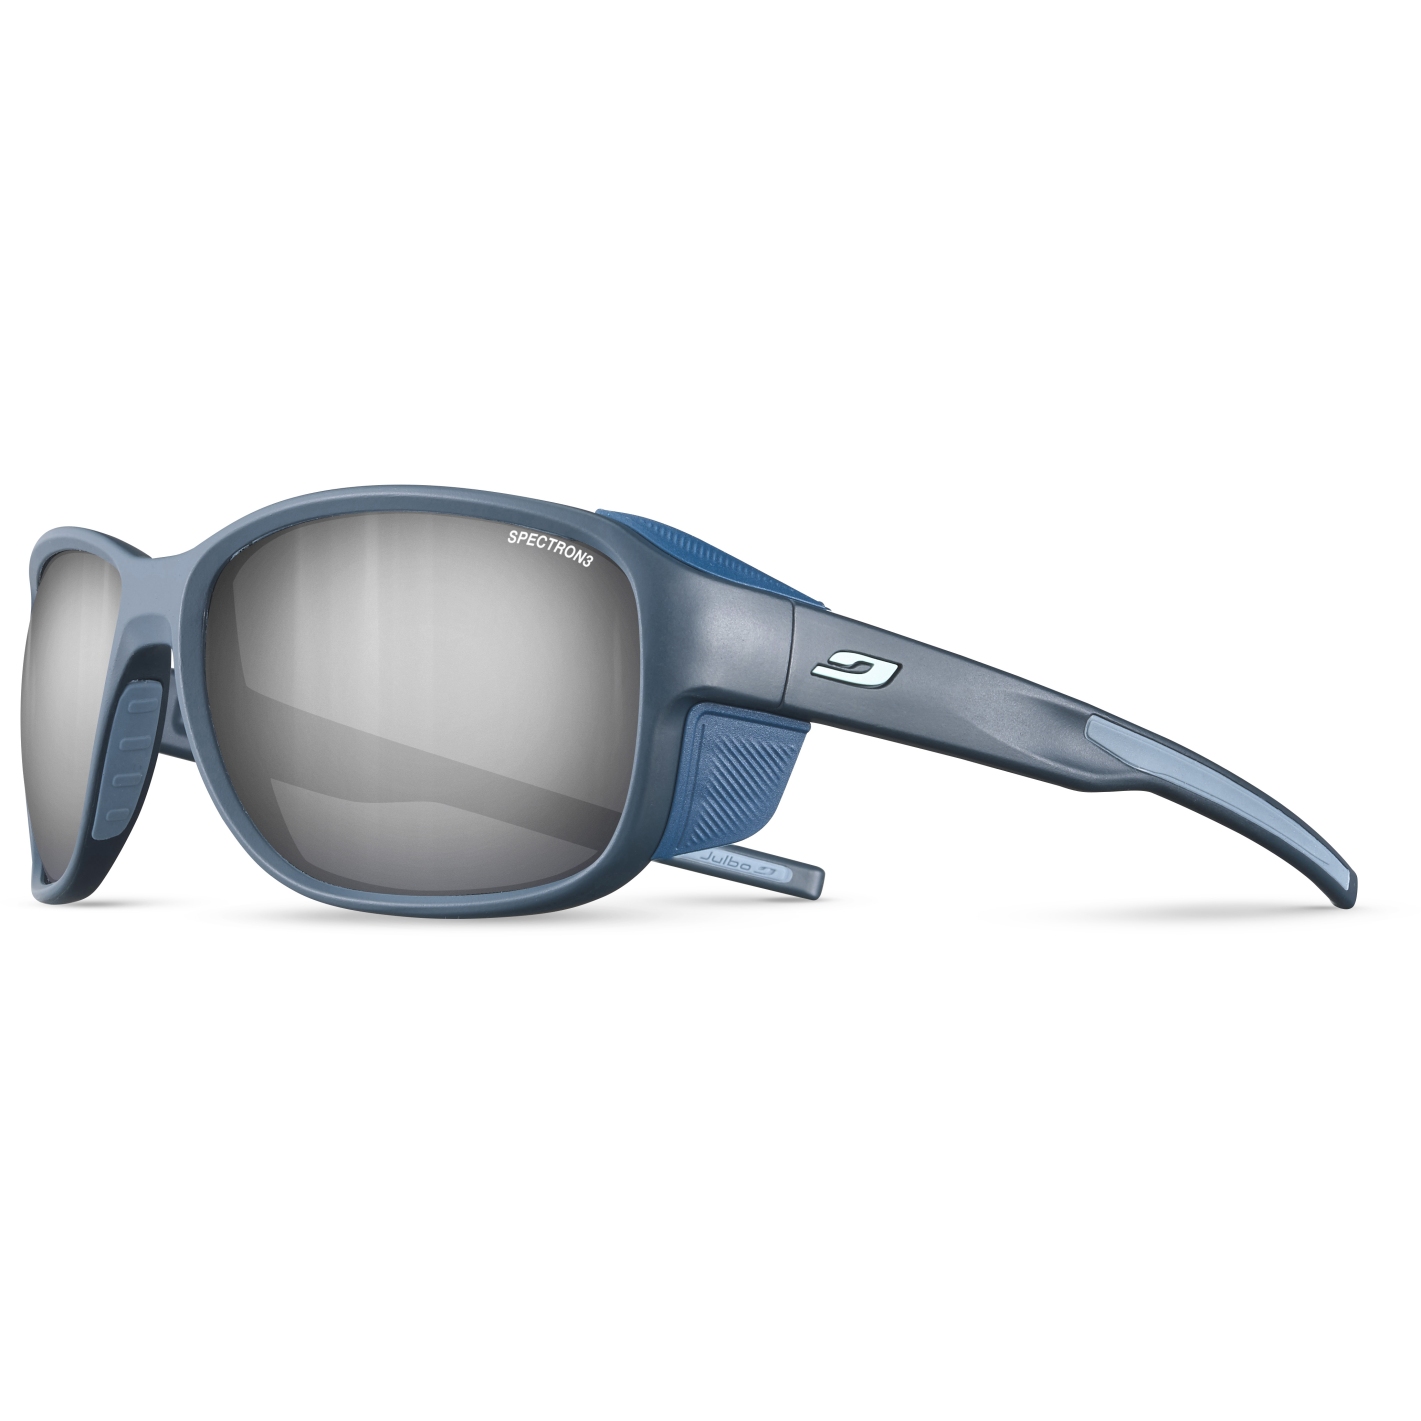 Picture of Julbo Montebianco 2 Sunglasses - Dark Blue/Blue/Mint / Silver Flash Reactiv 2-4 Polarized